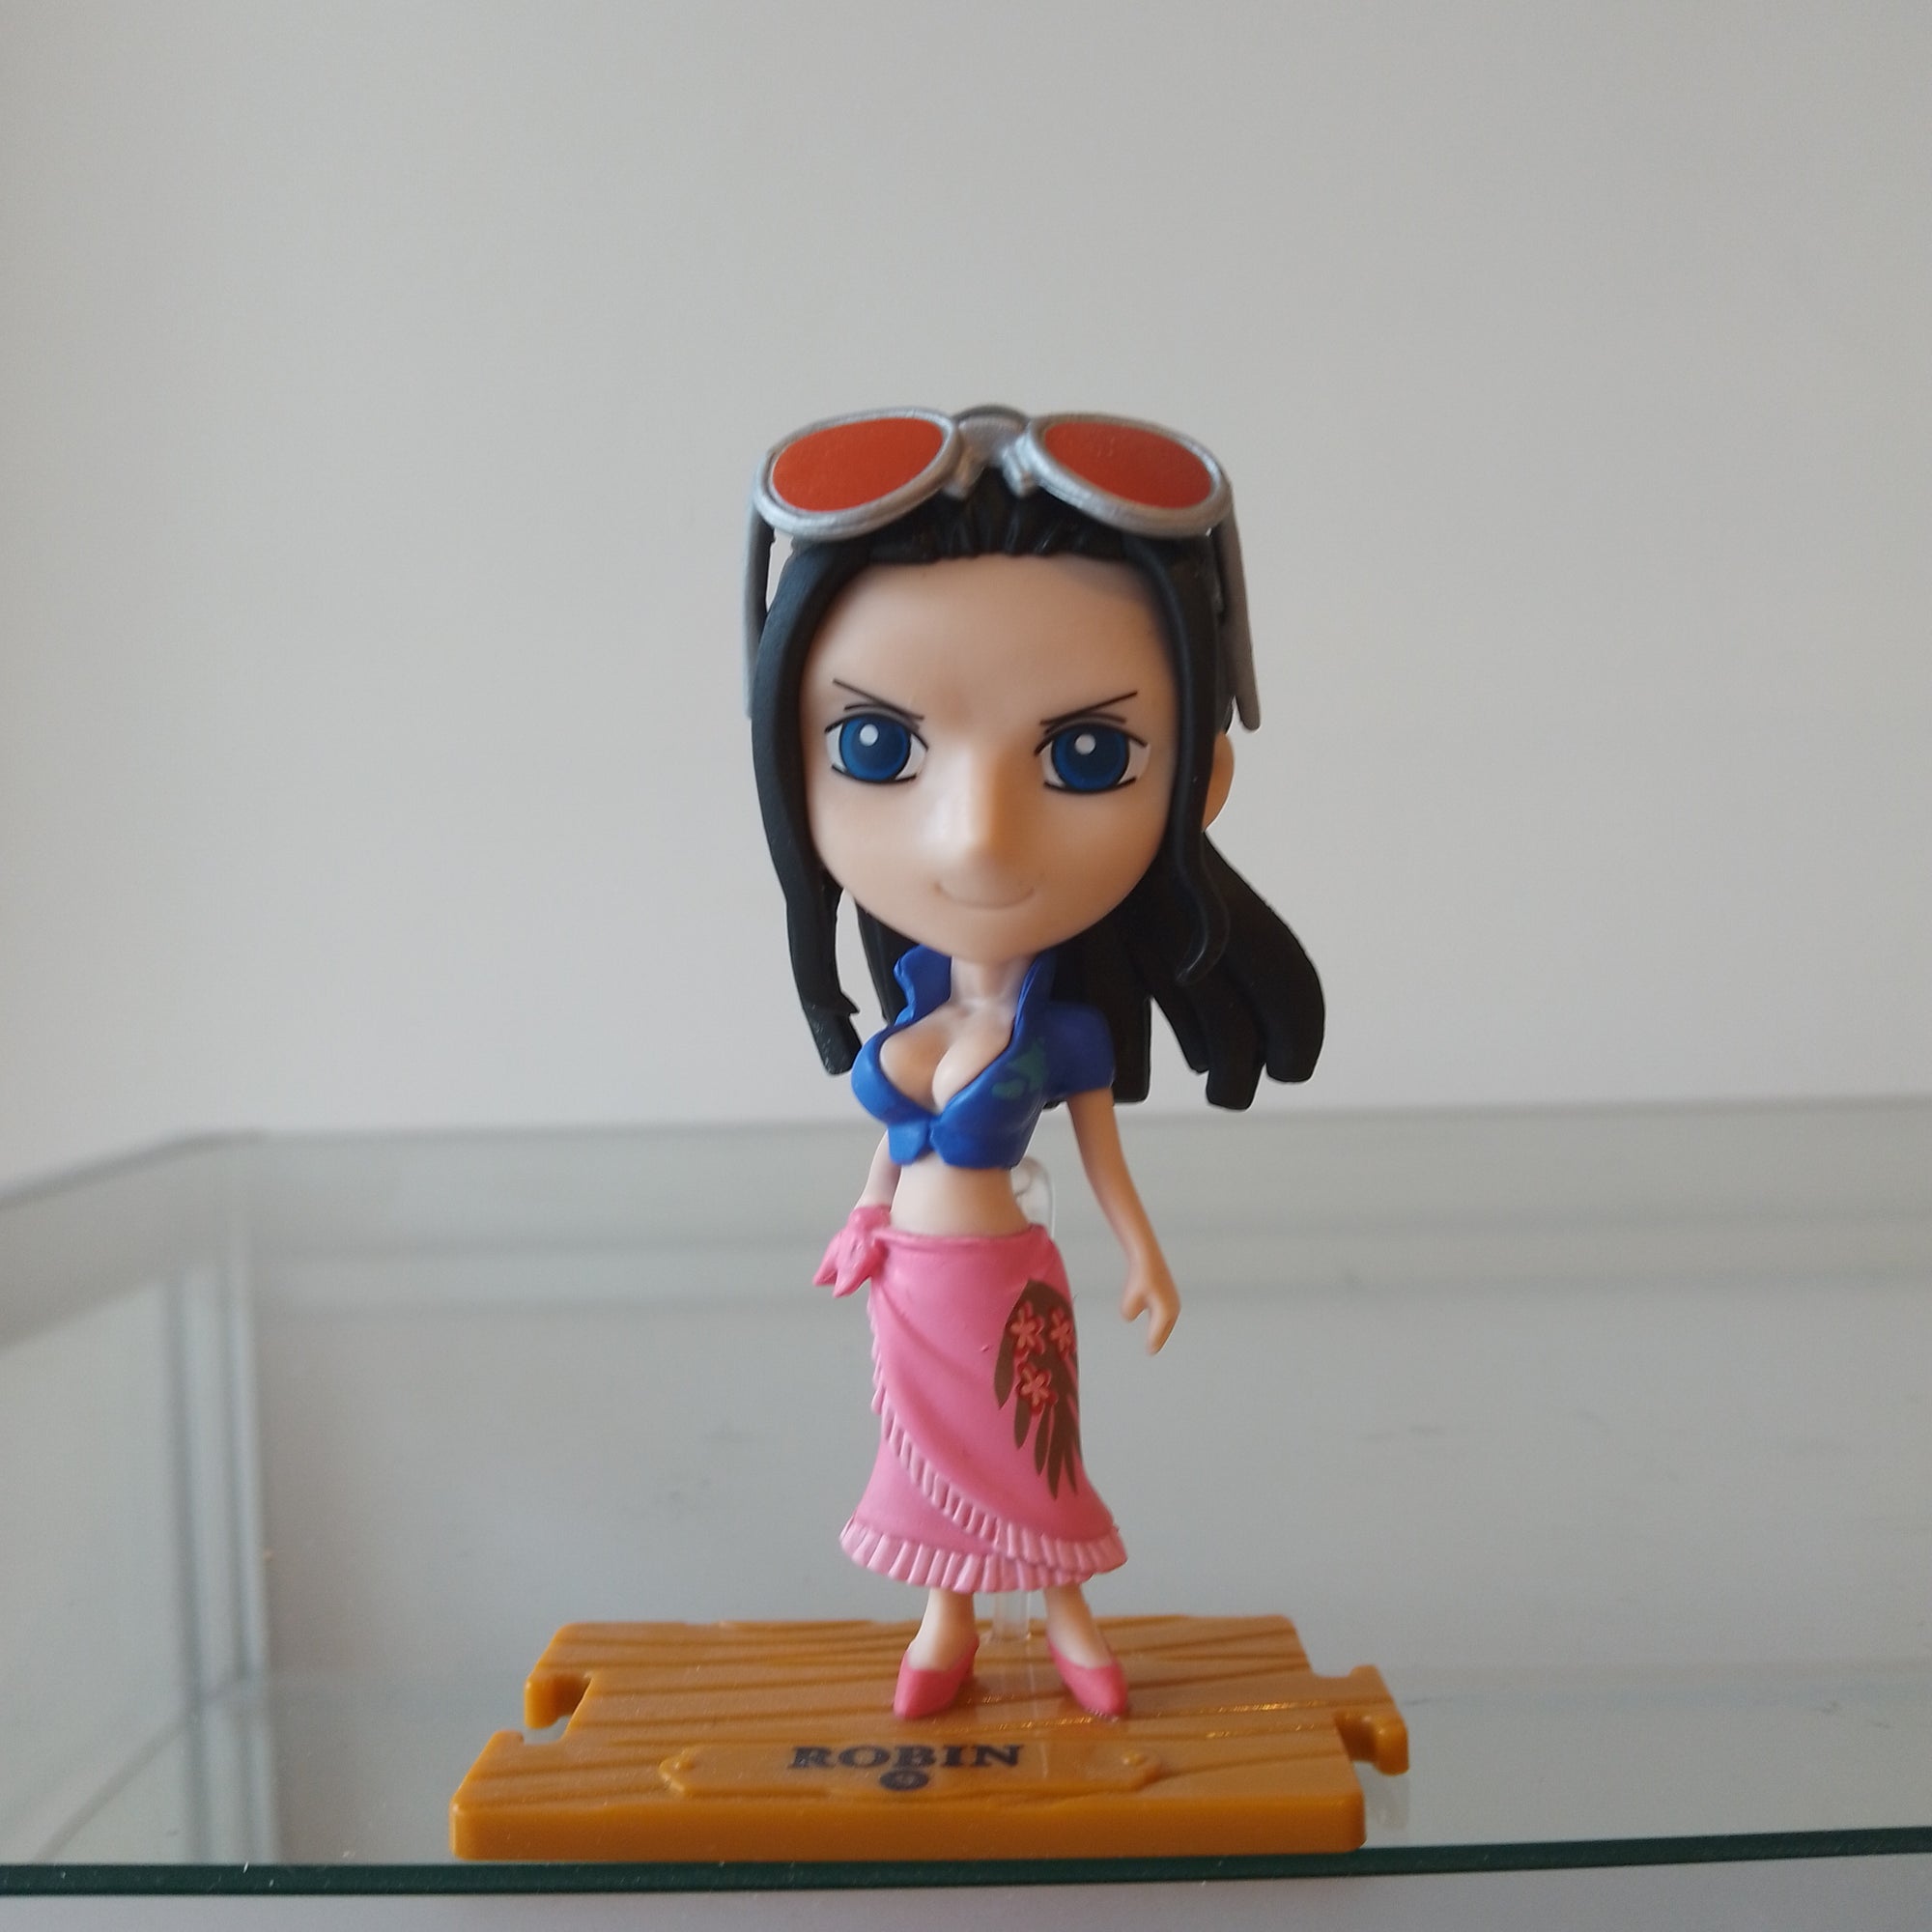 Robin - One Piece Toy Figure